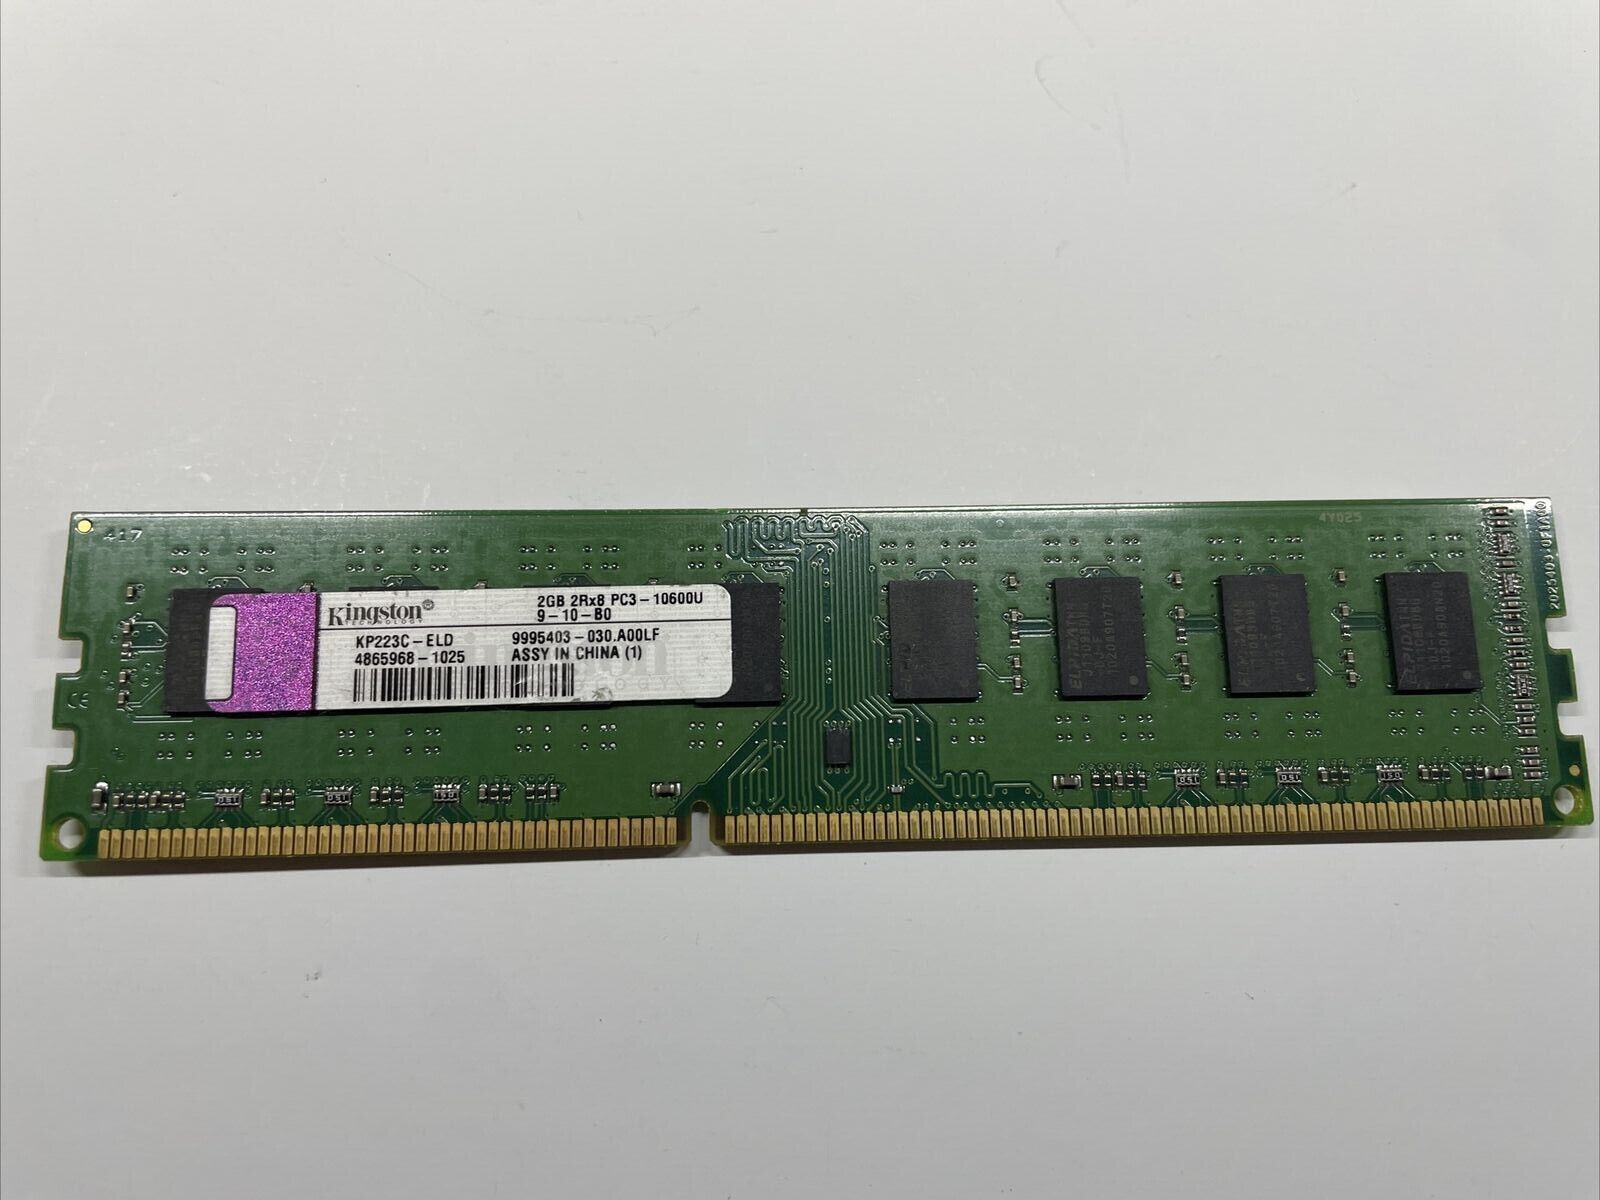 Kingston KP223C-ELD 2GB DDR3 10600 MEMORY MODULE